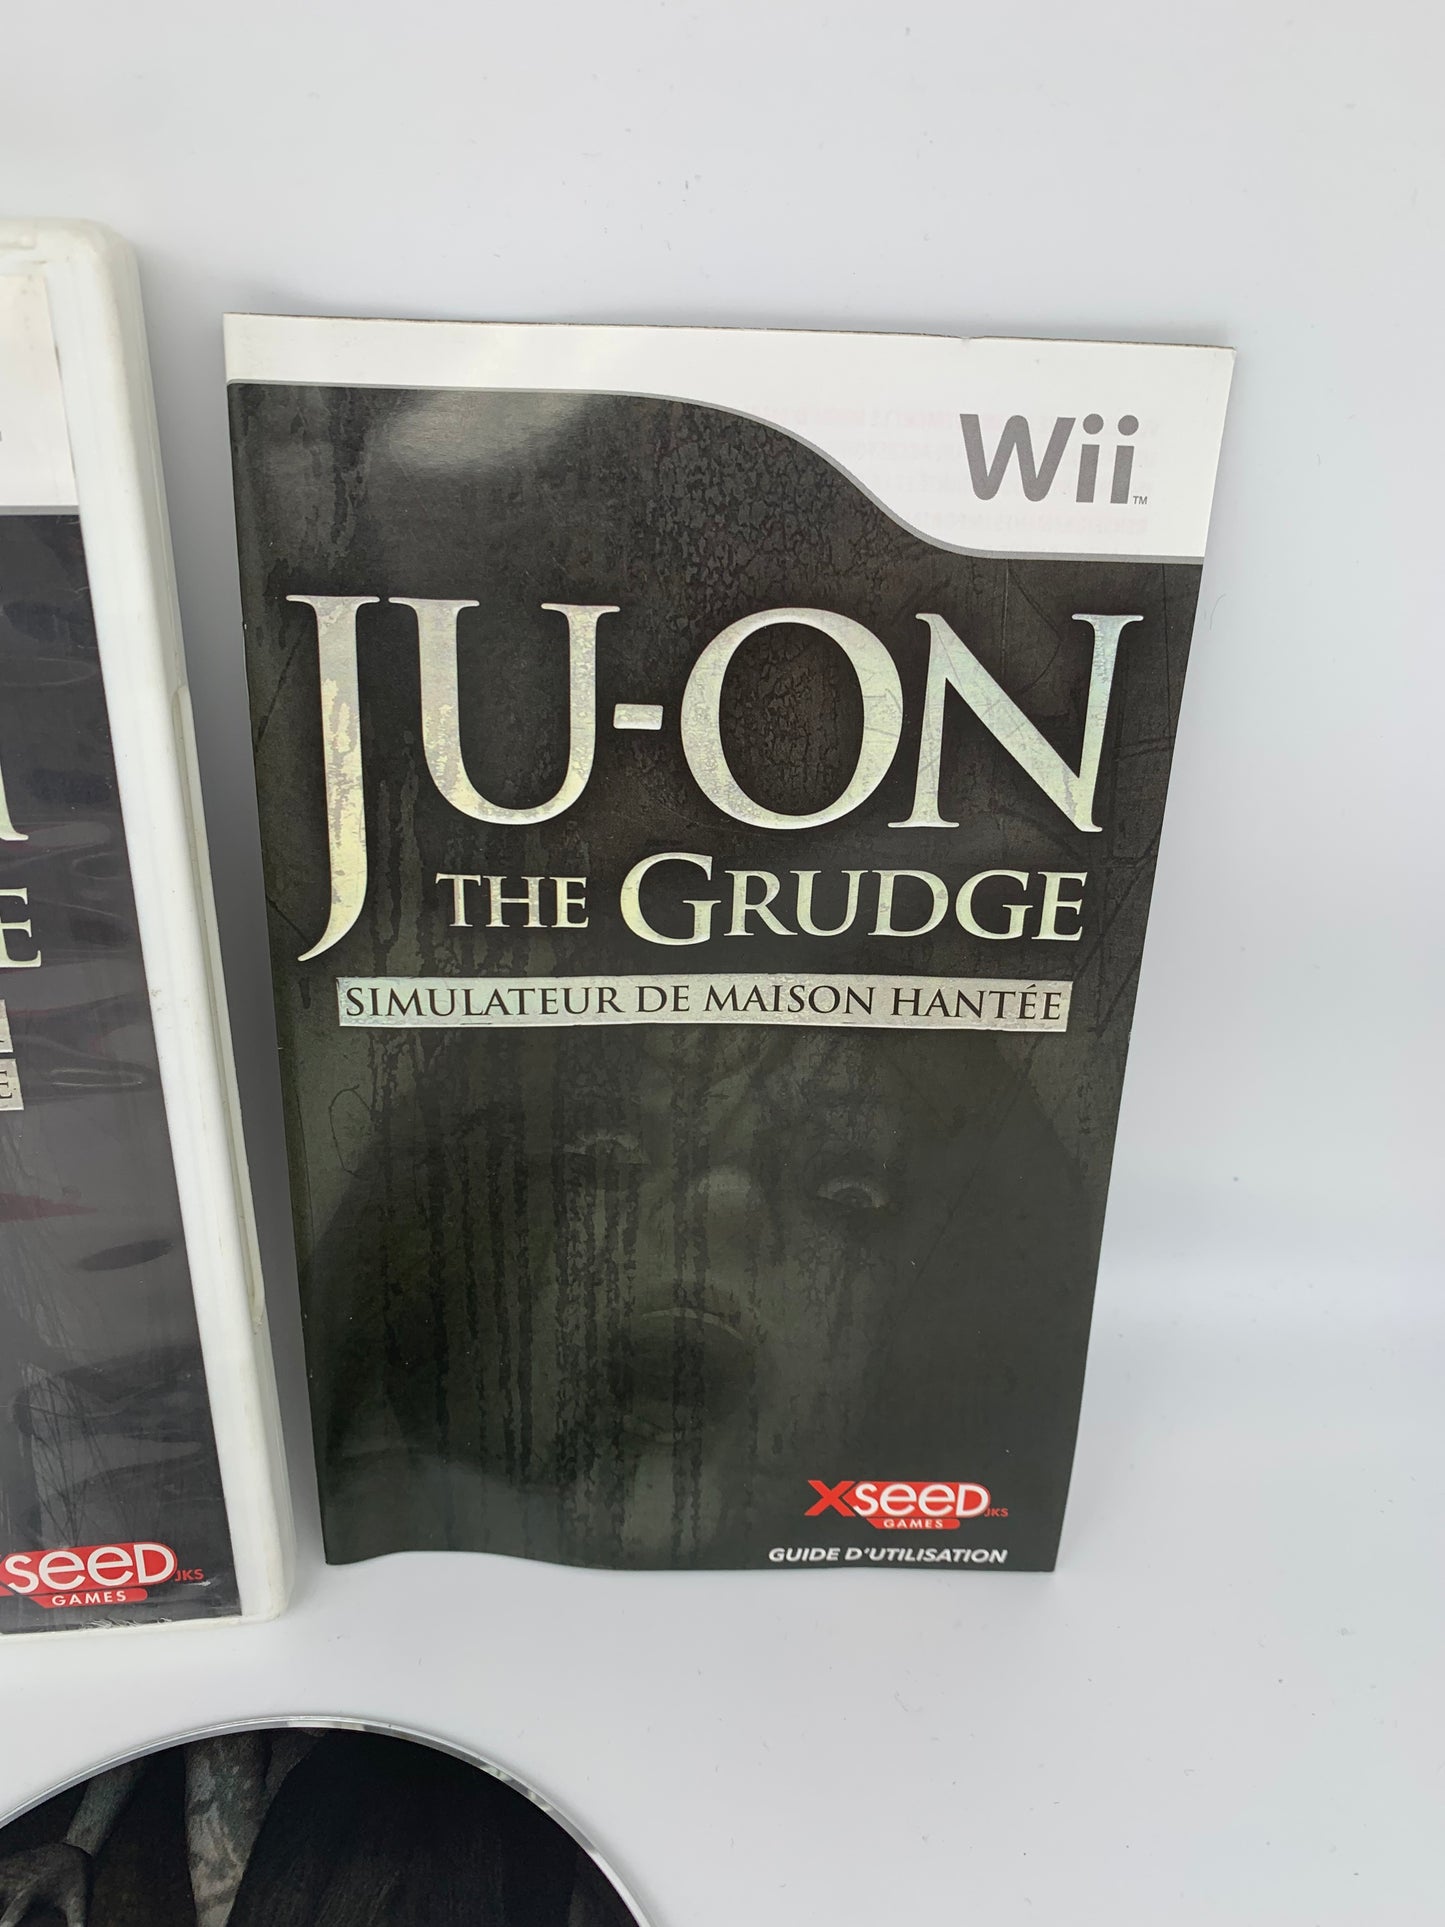 NiNTENDO Wii | JU-ON THE GRUNDGE HAUNTED HOUSE SiMULATOR